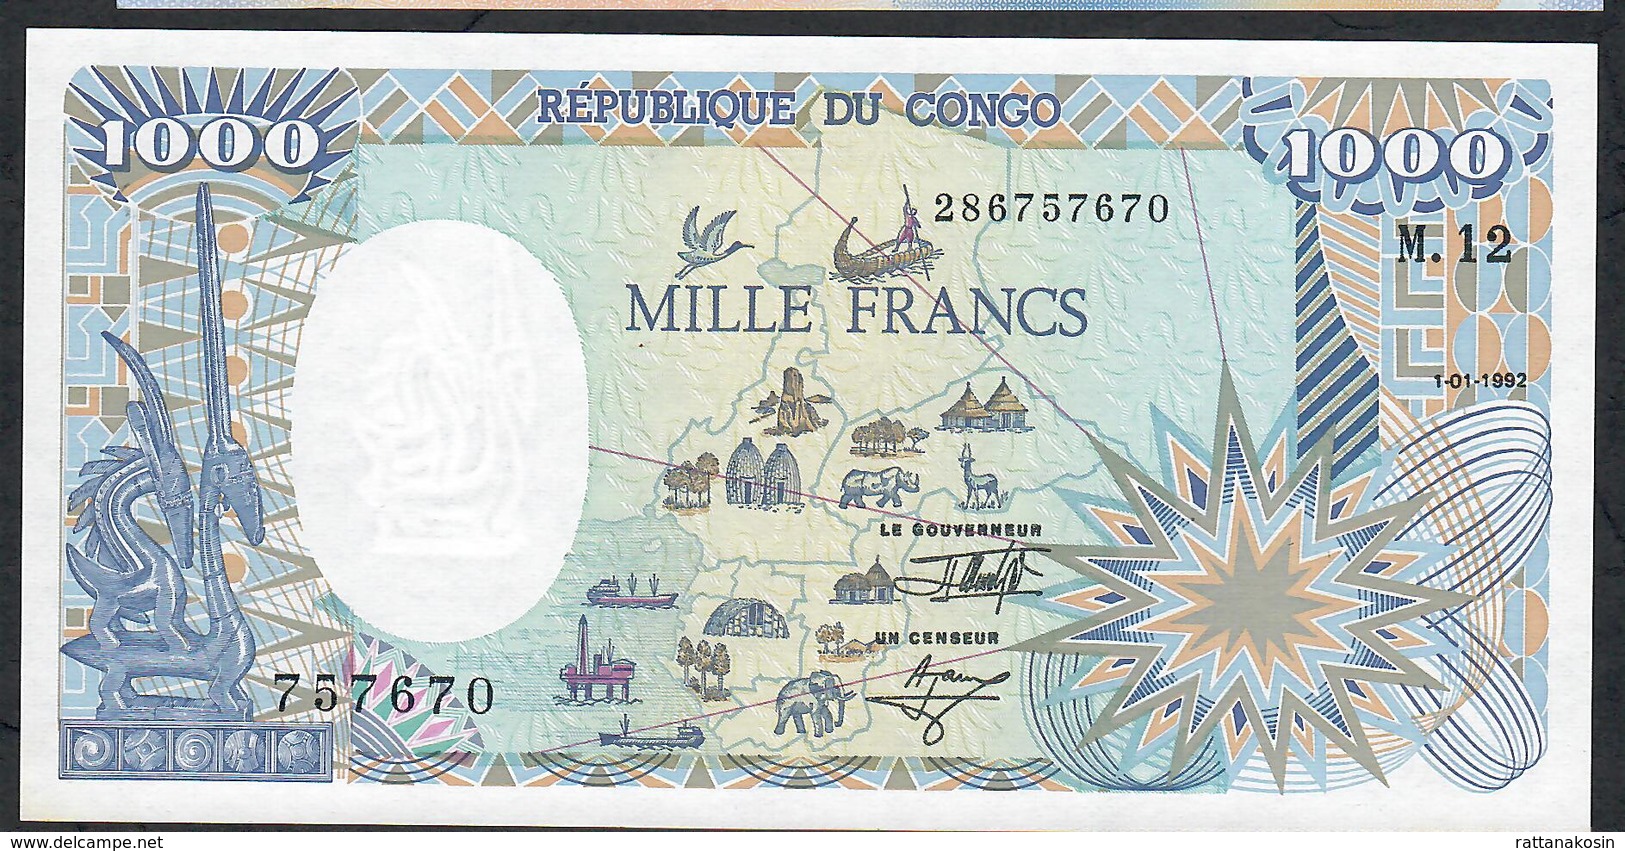 CONGO REPUBLIC P11 1000 FRANCS 1992 UNC. - Republic Of Congo (Congo-Brazzaville)